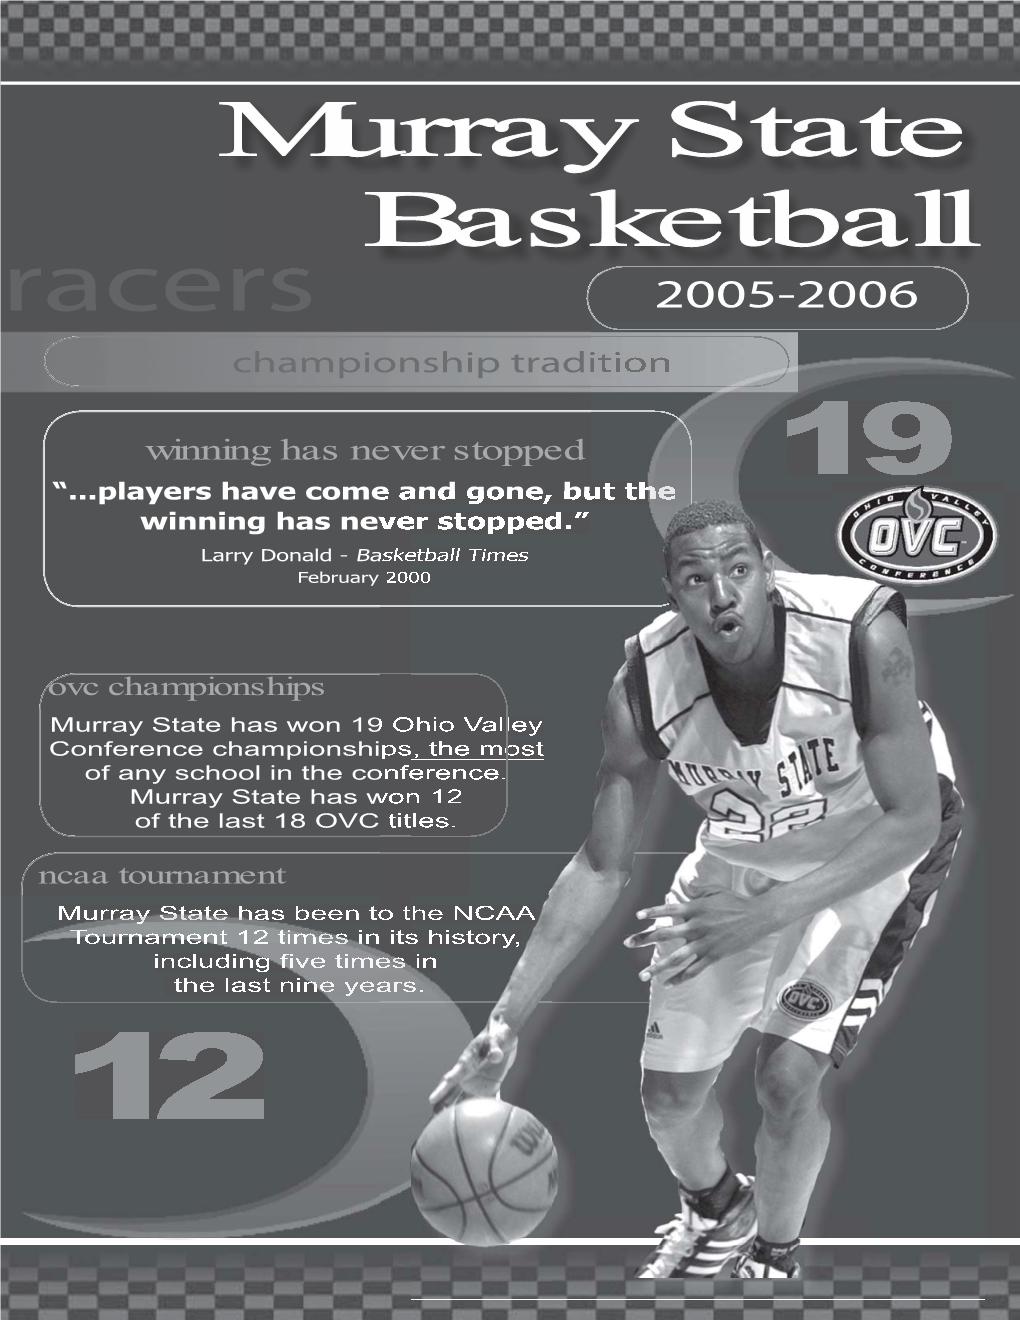 MSU Basketball 05-06 Guide ALL.Indd